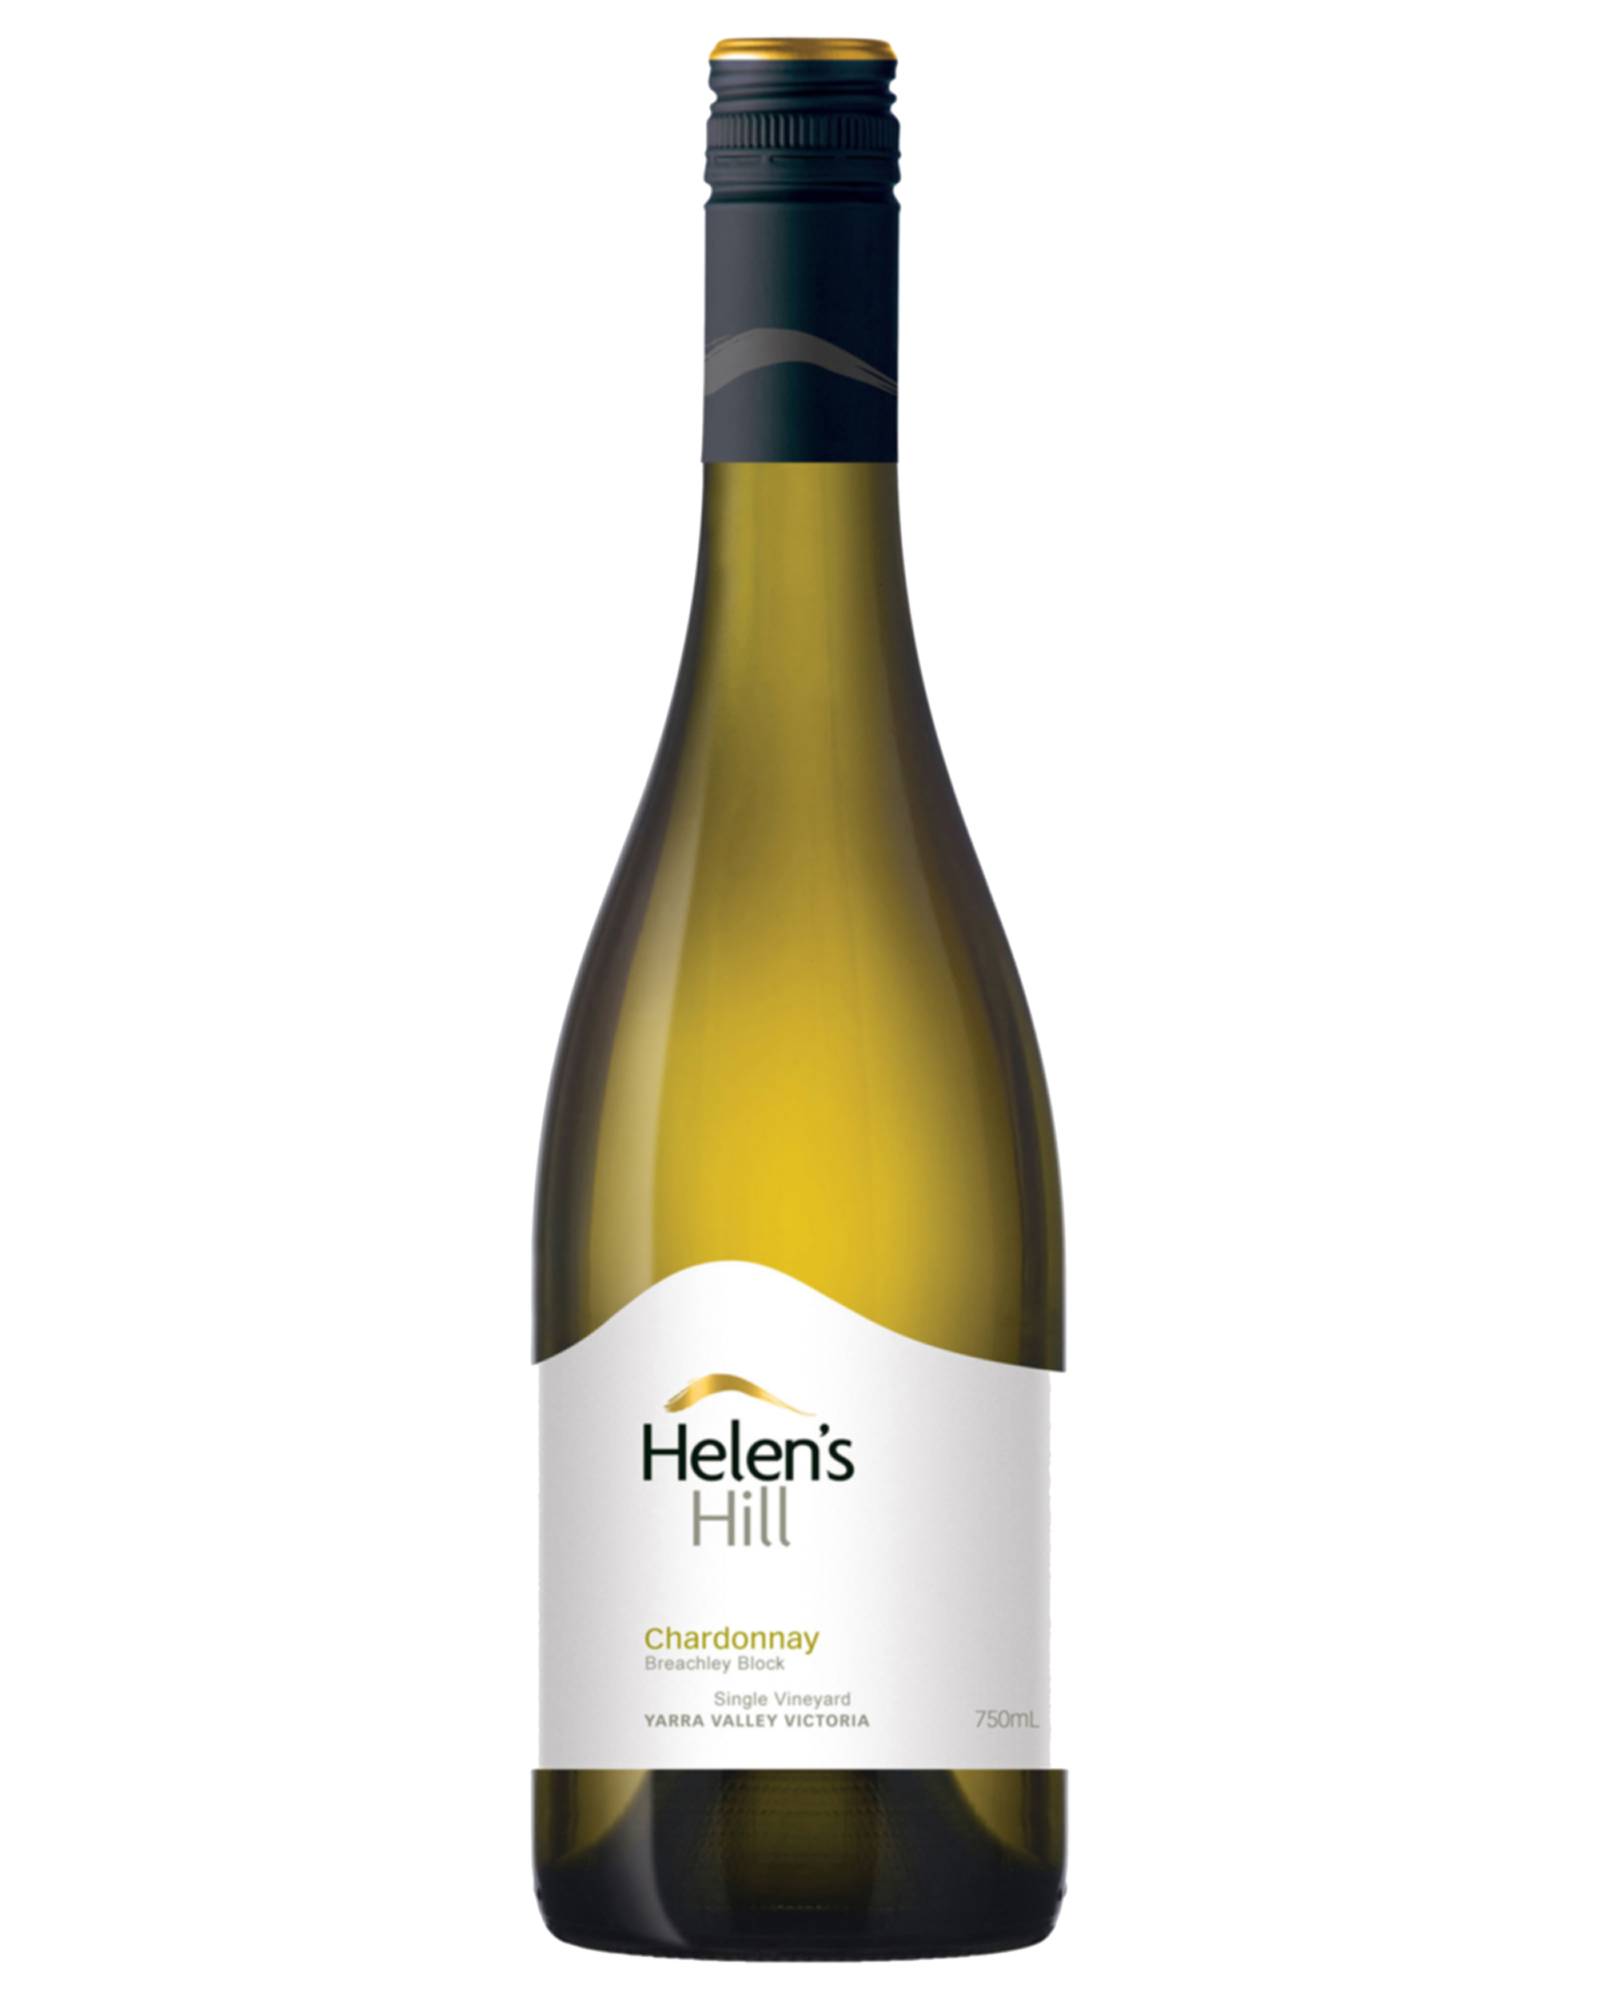 Helen’s Hill Chardonnay